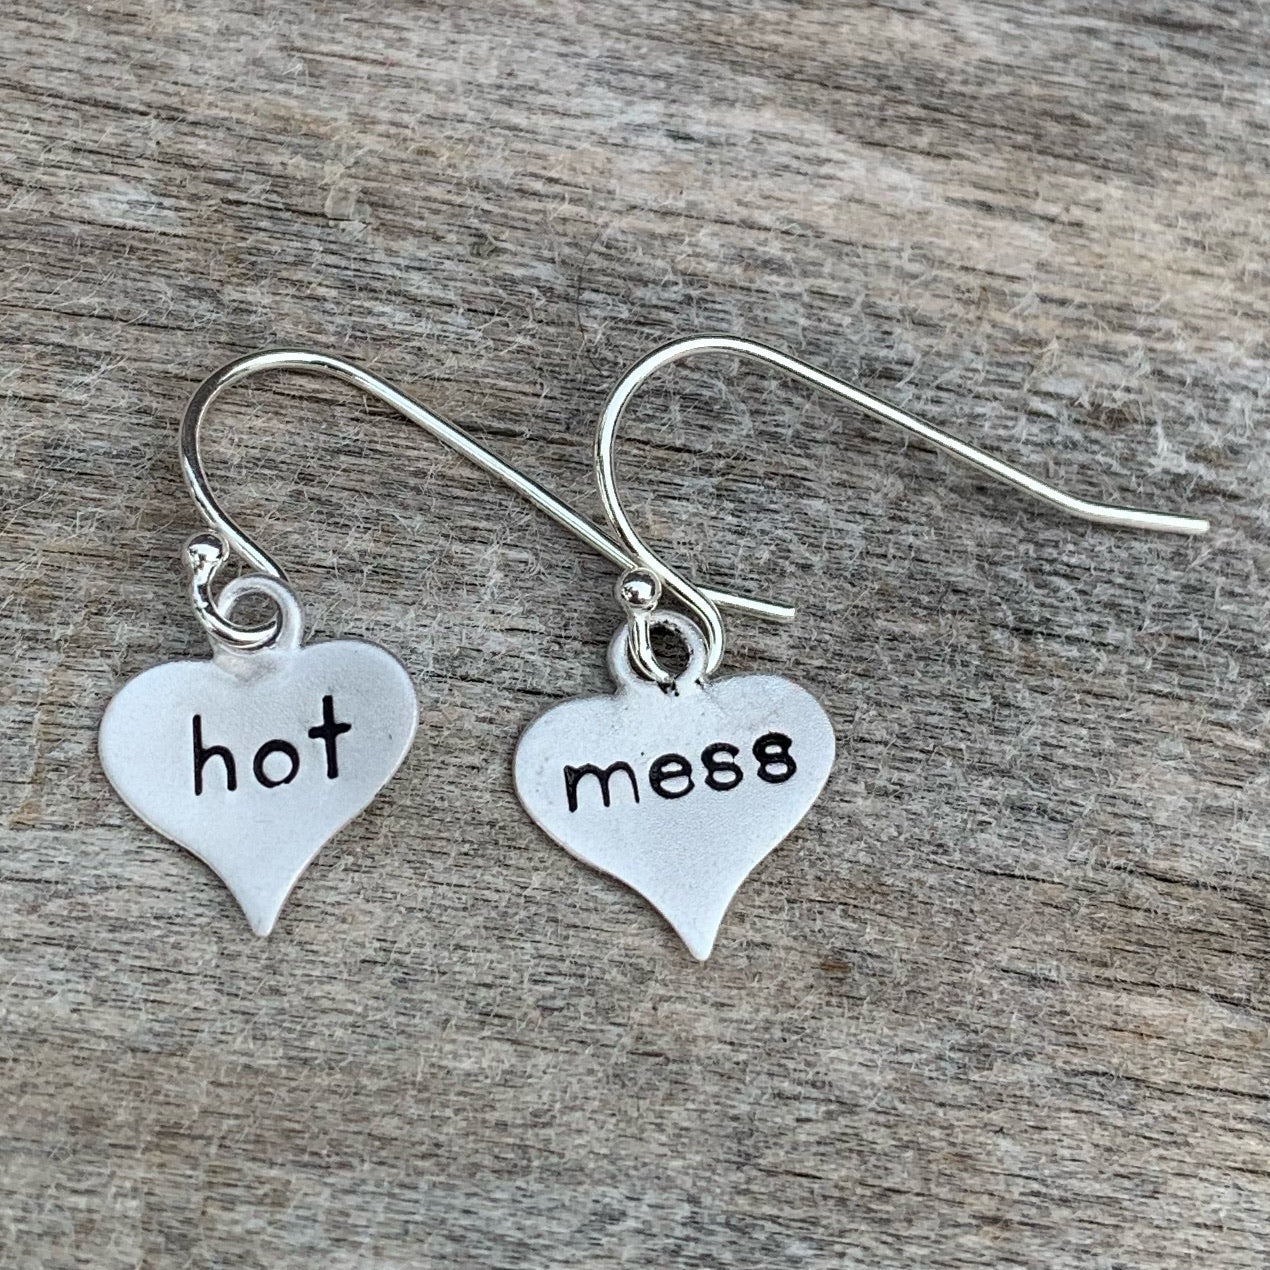 Pair of sterling silver earrings - heart shape - “hot mess”